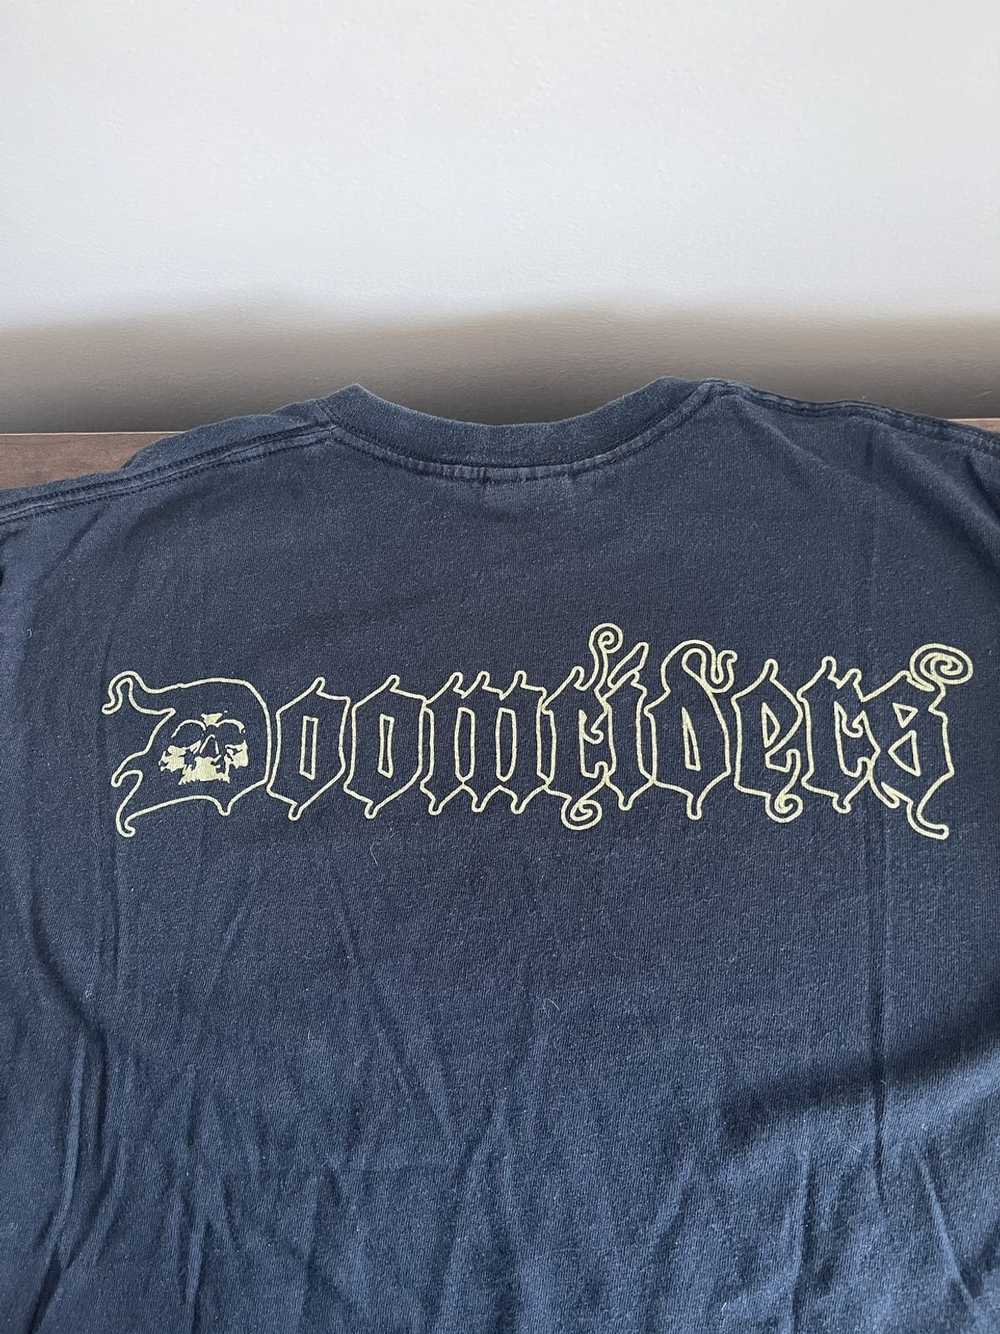 Band Tees Doomriders Vintage T-Shirt - image 5